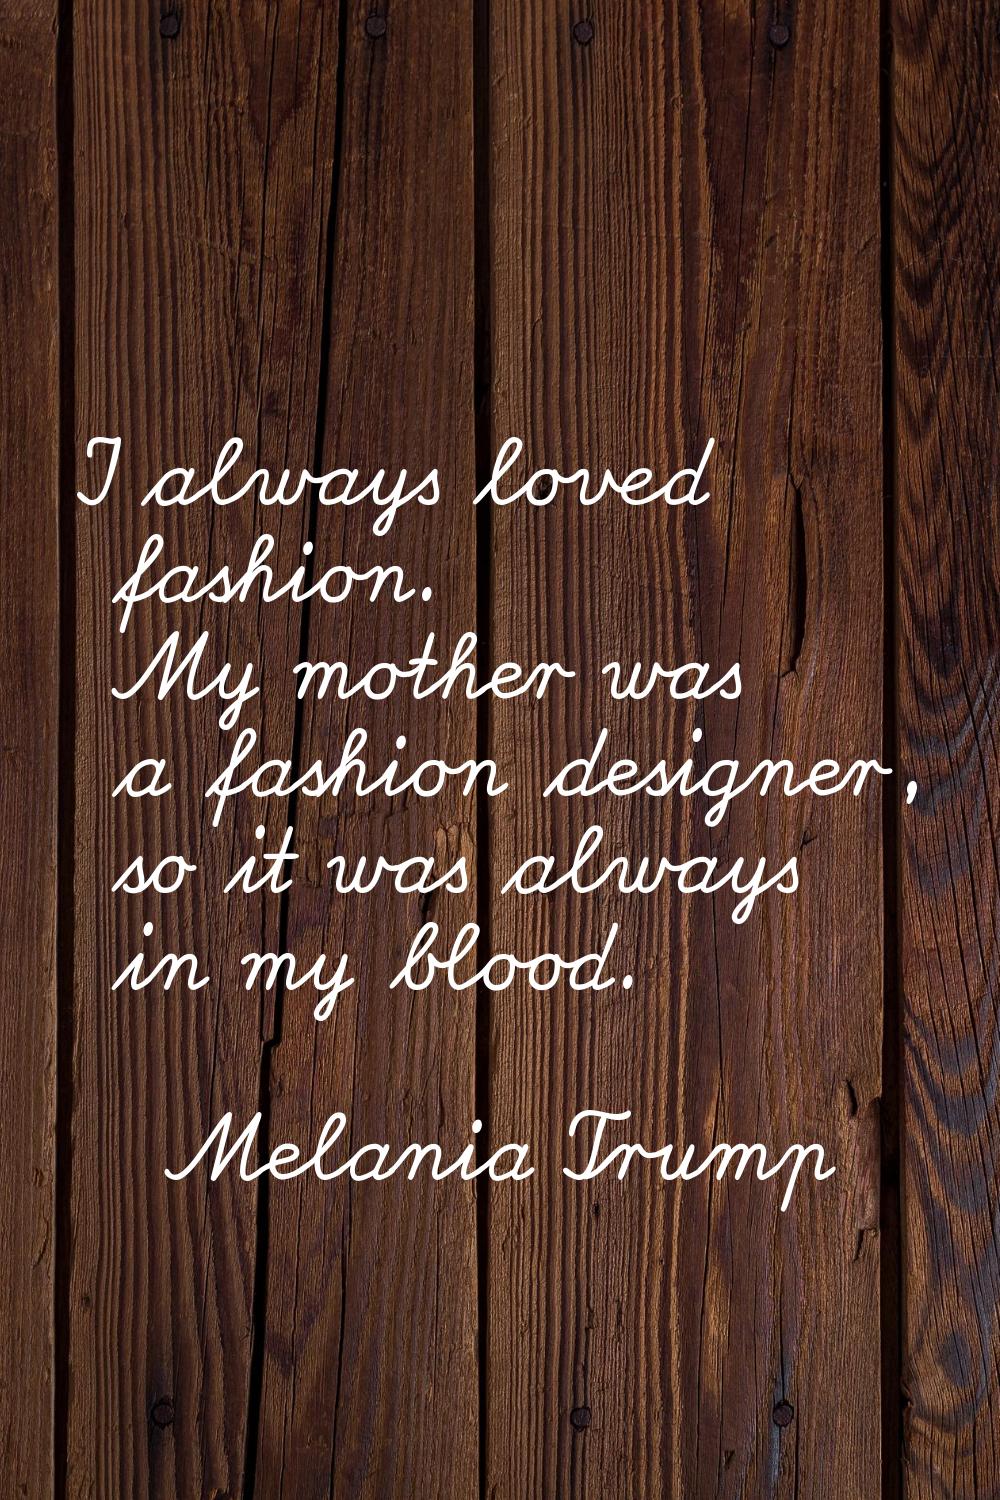 I always loved fashion. My mother was a fashion designer, so it was always in my blood.